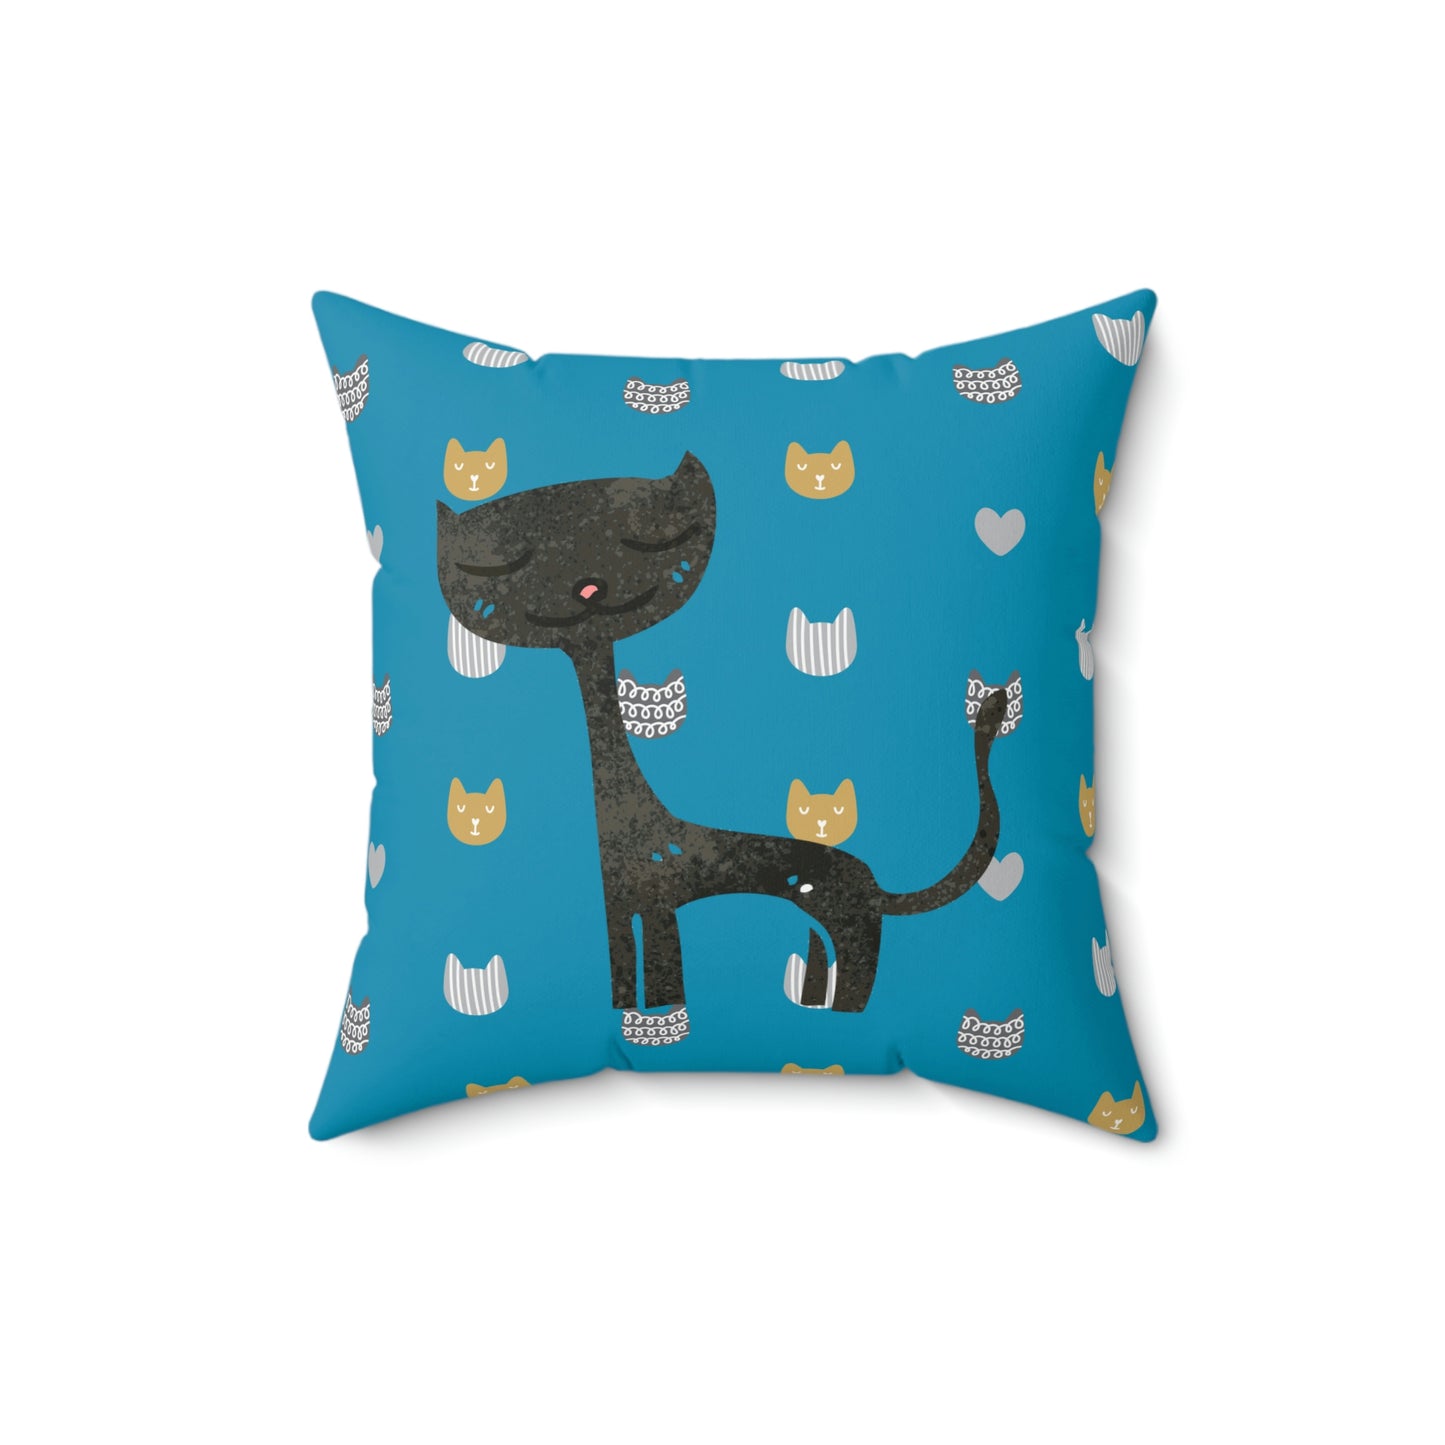 Cats & Heats patten Black Cat Design Spun Polyester Square Indoor Pillow